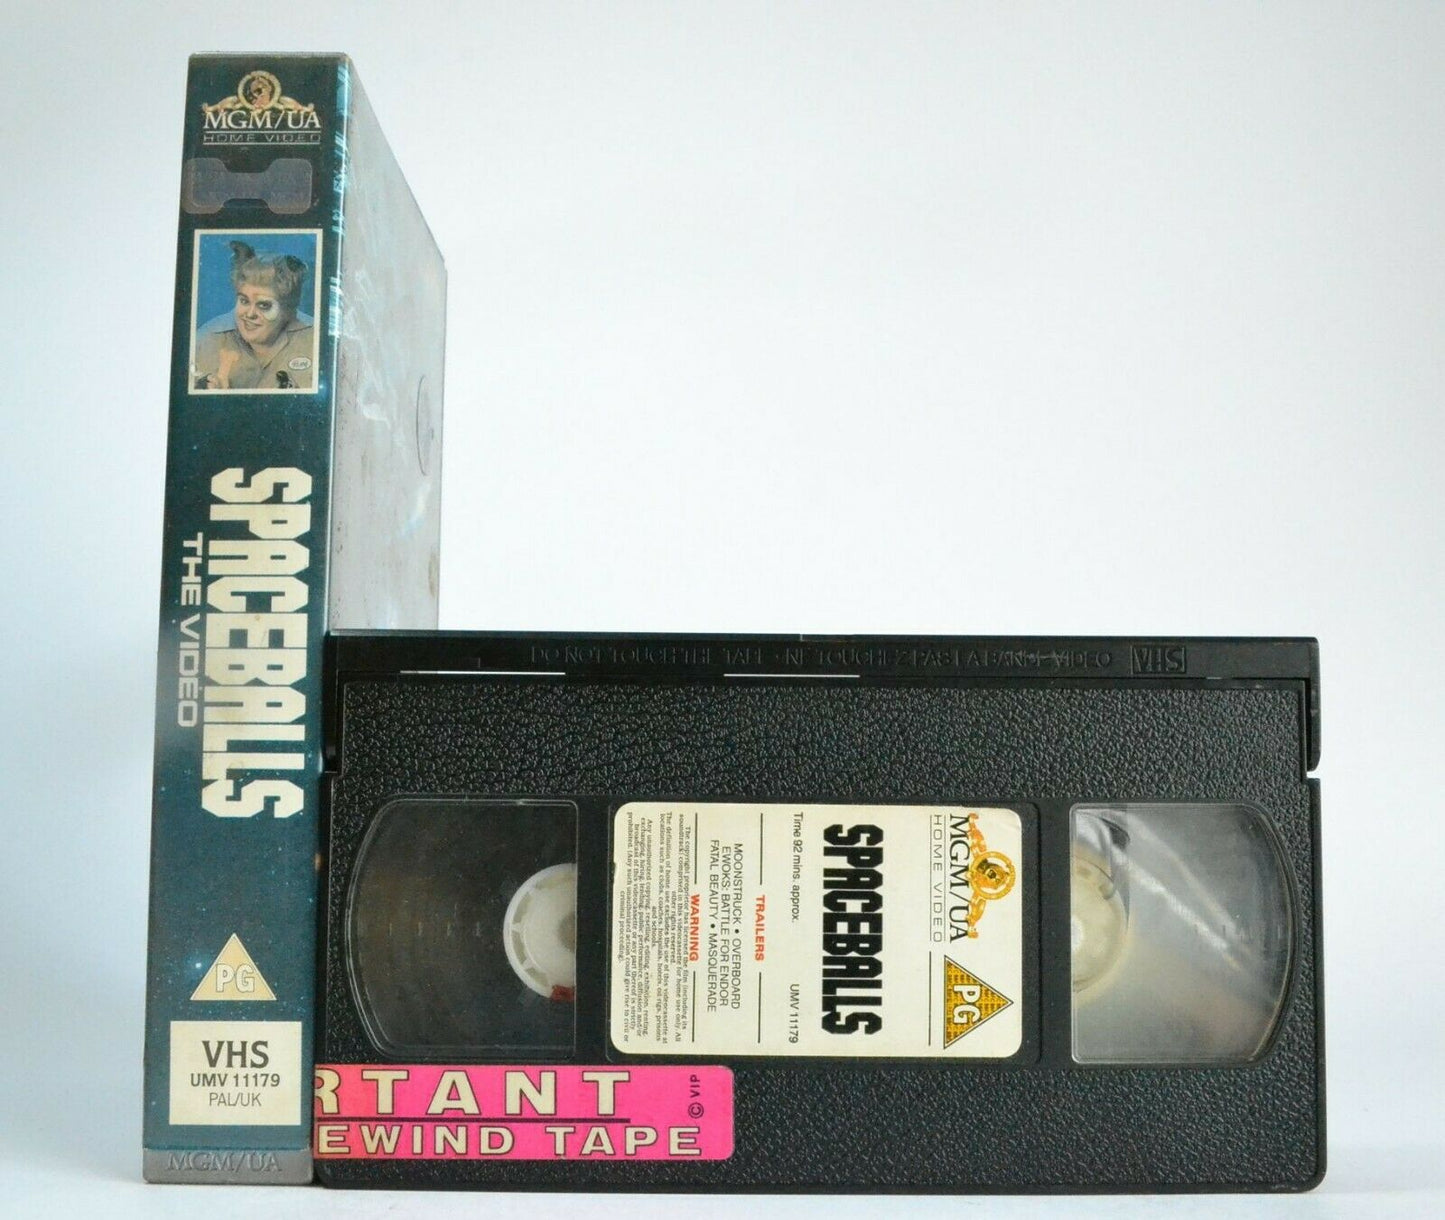 Spaceballs (1987): Film By Mel Brooks - "Star Wars" Parody - John Candy - VHS-